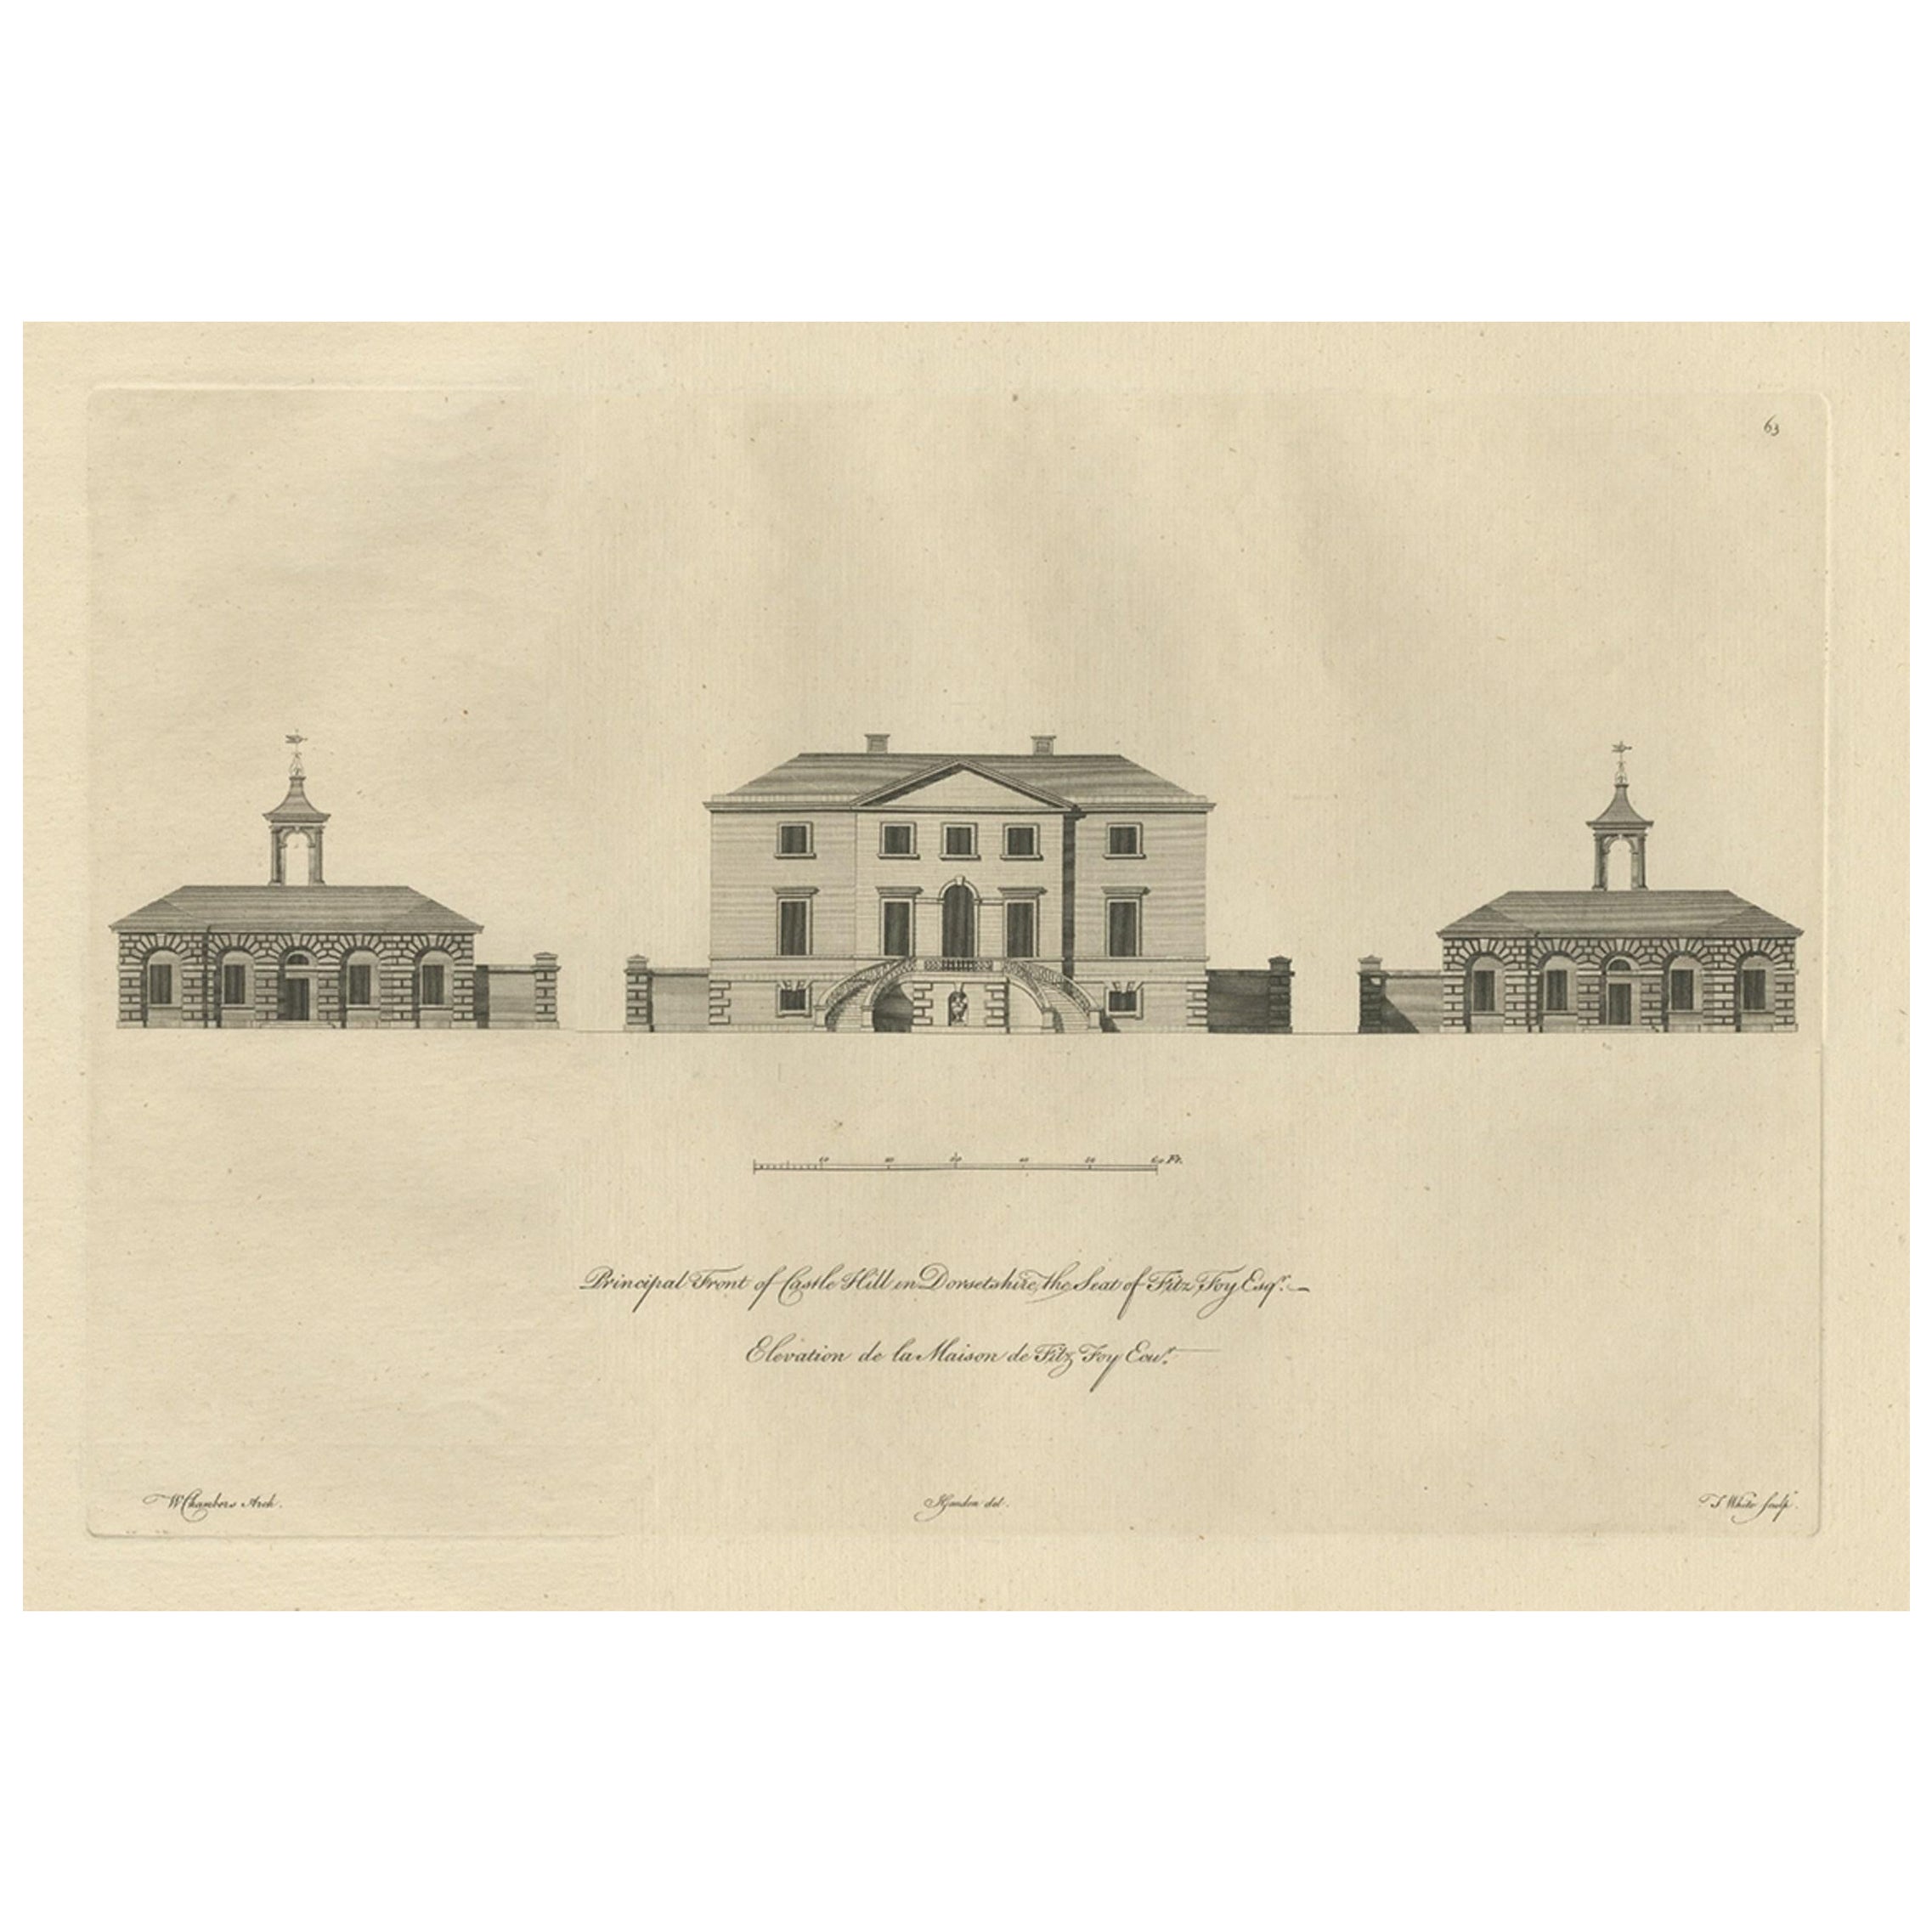 Impression ancienne de la façade principale de Castle Hill, Dorsetshire, Angleterre, vers 1770